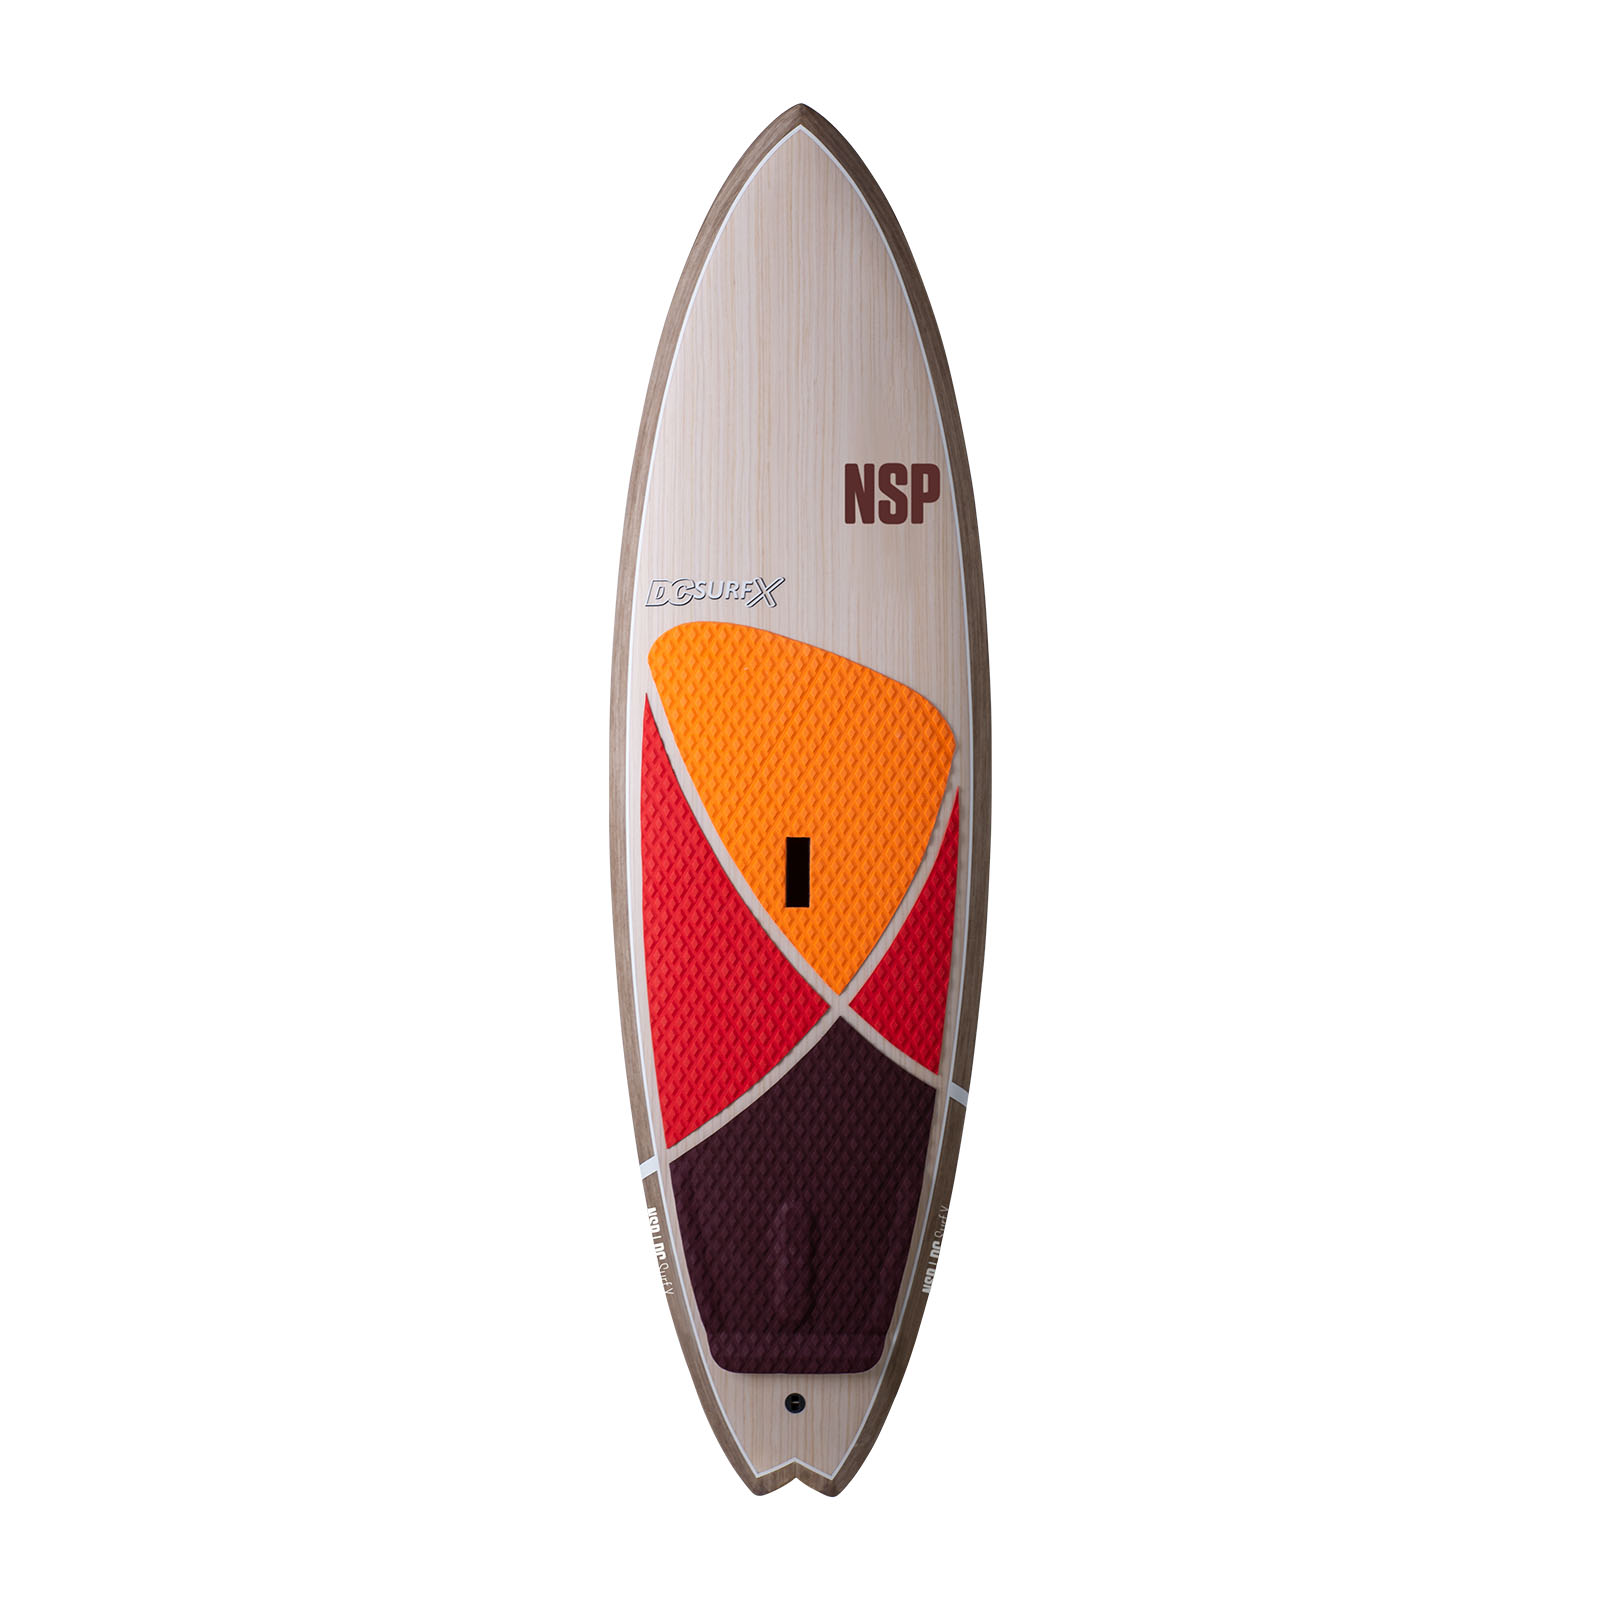 SLX DC Surf X deck shot